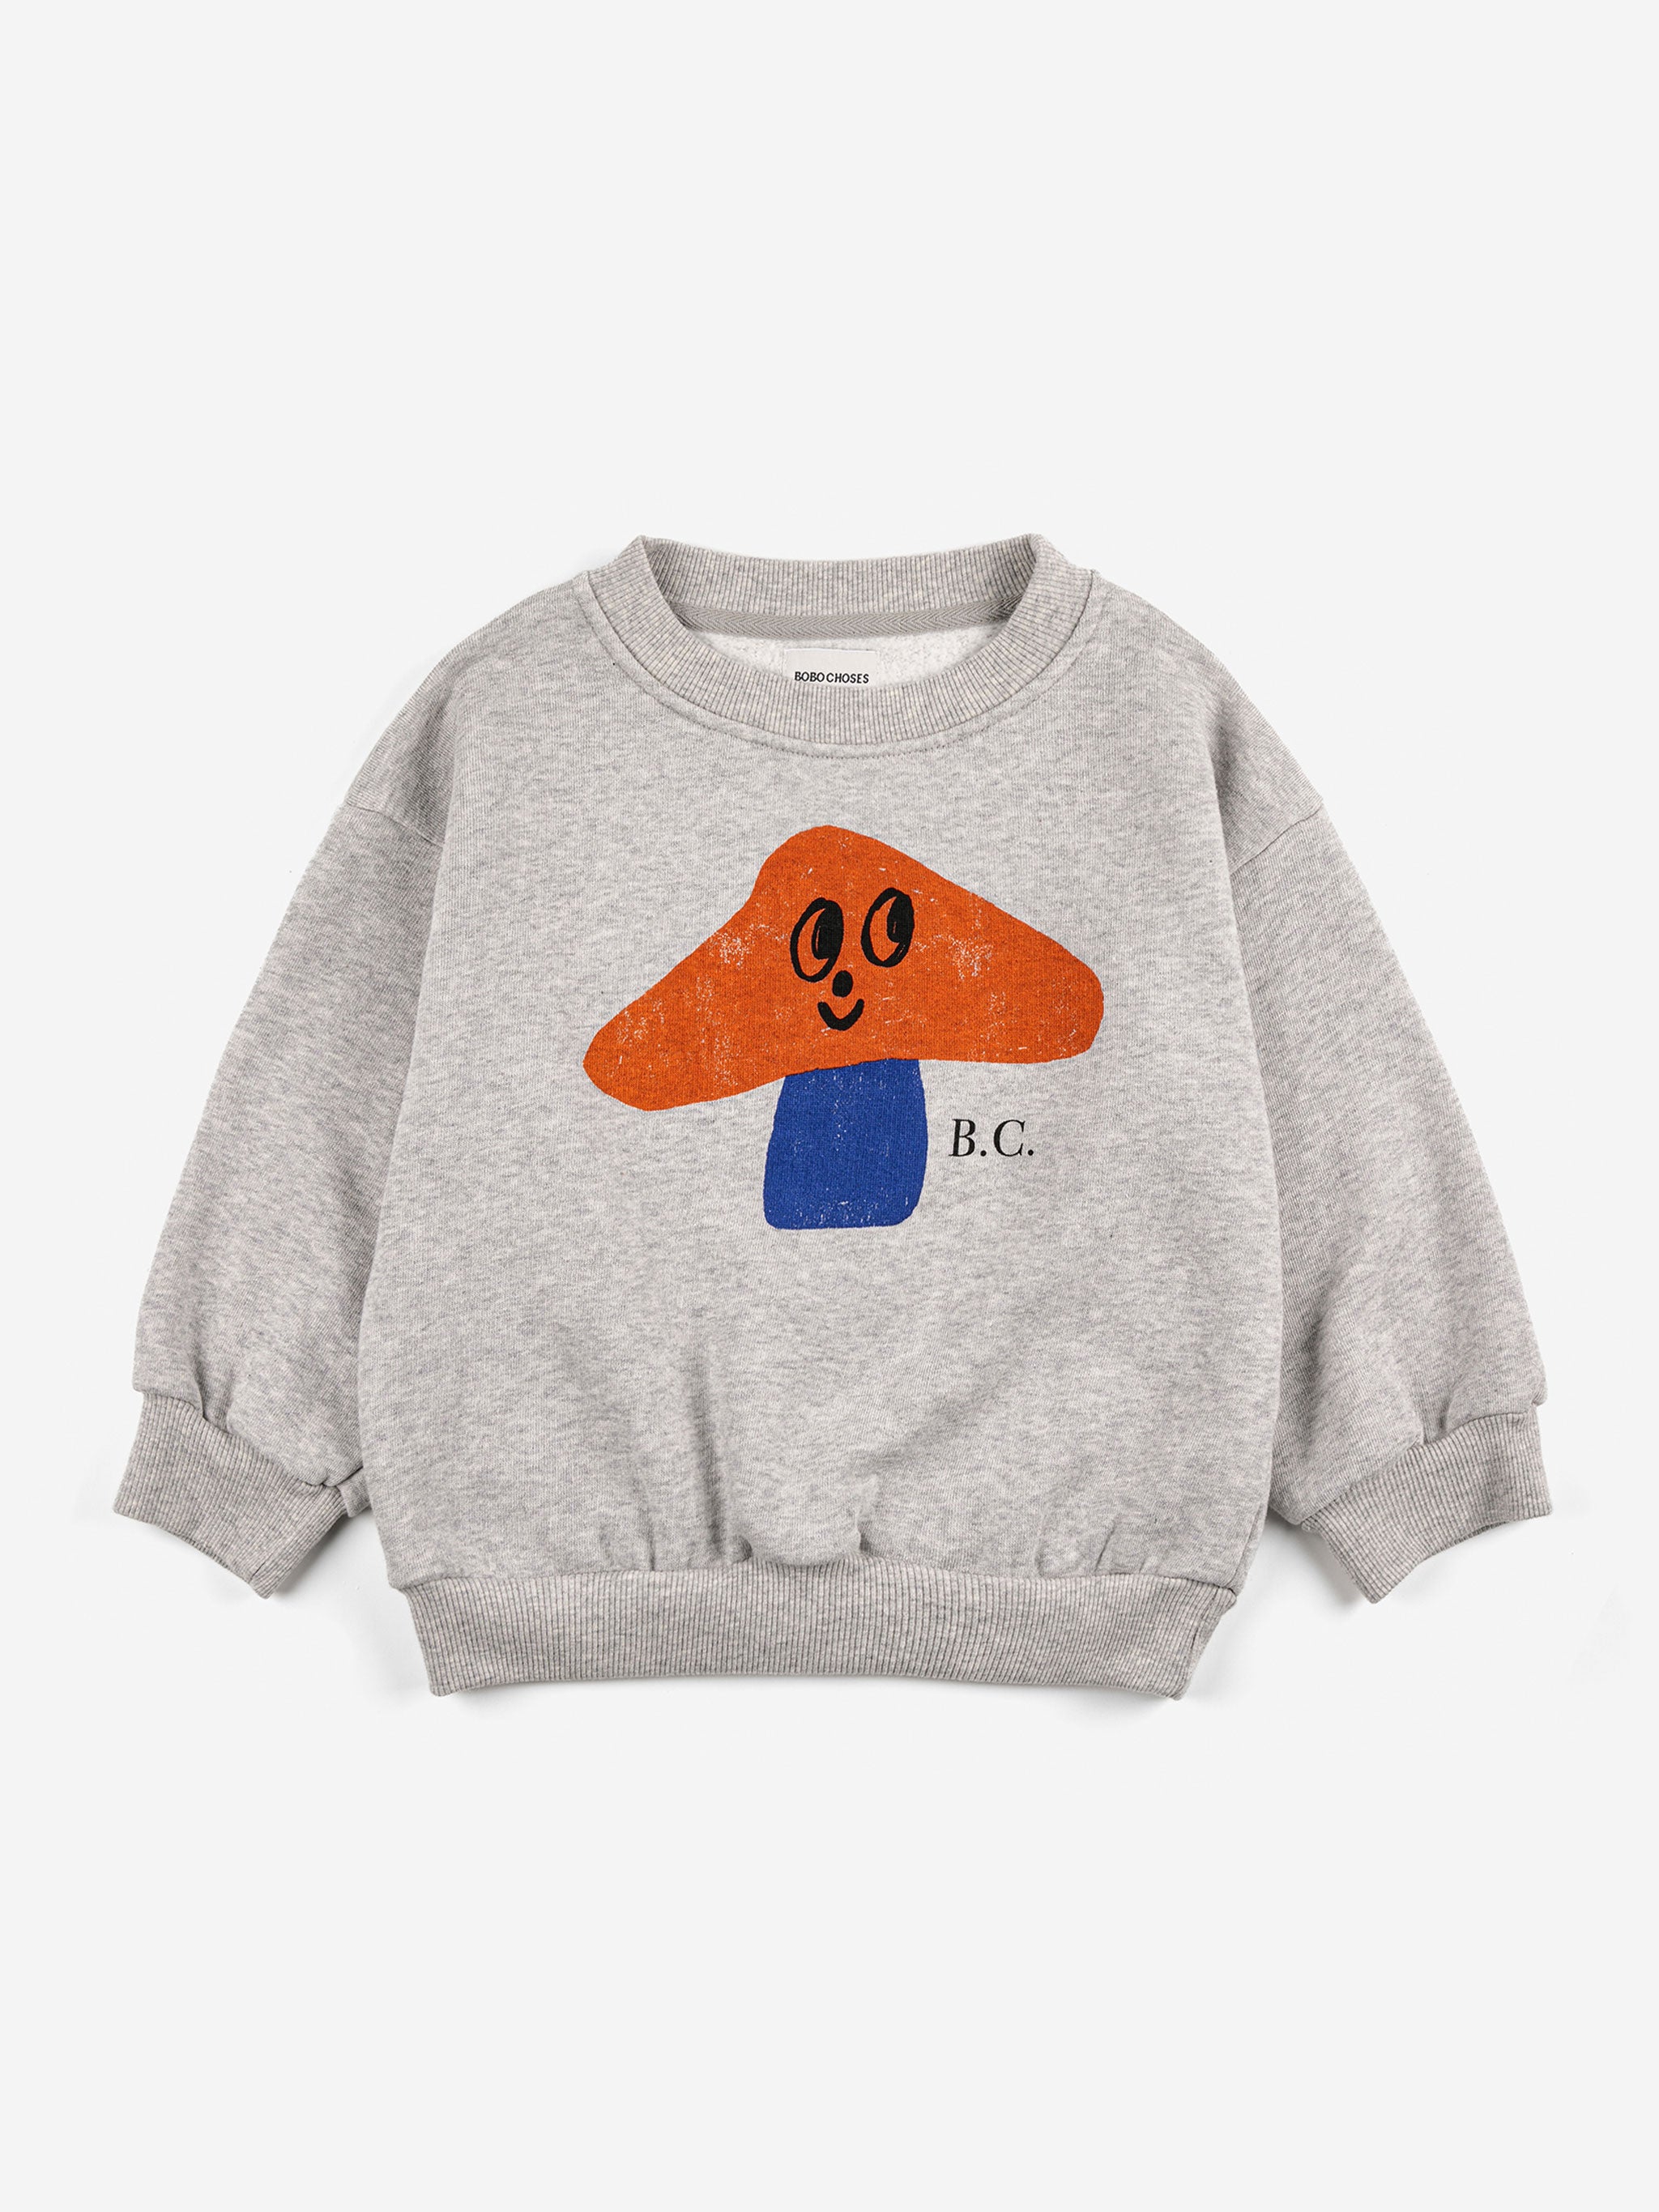 Mr. Mushroom sweatshirt – Bobo Choses